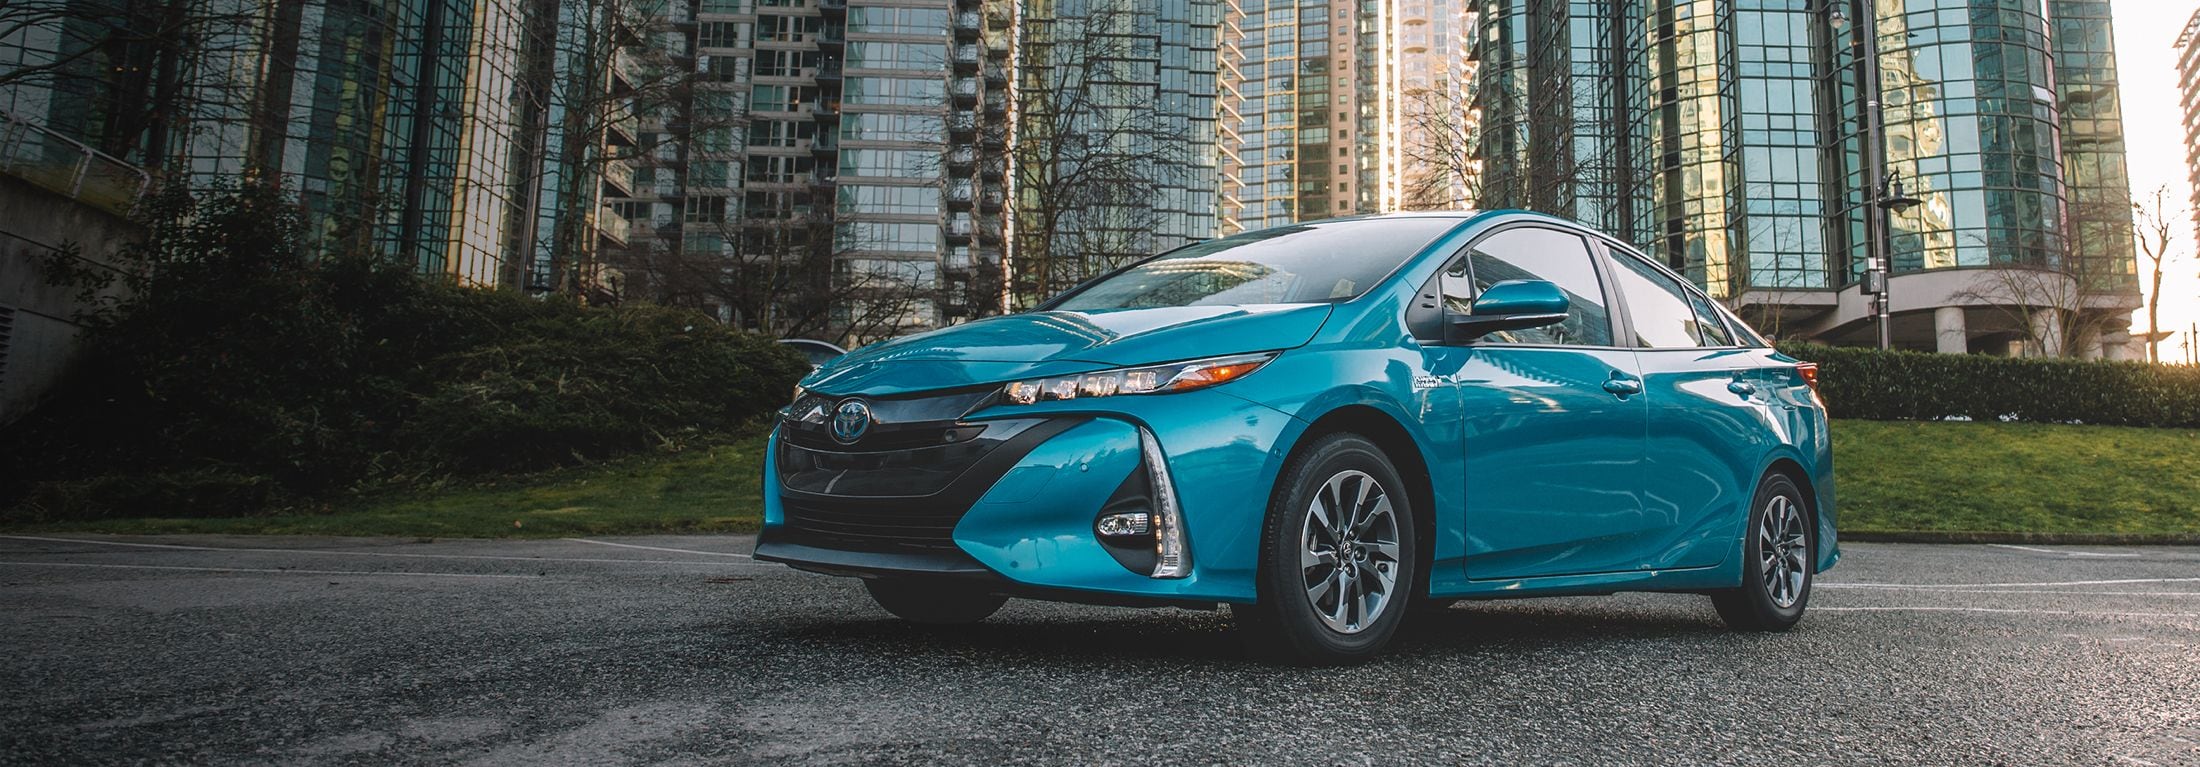 Toyota Hybrid Models vs. PRIME Hybrid Models